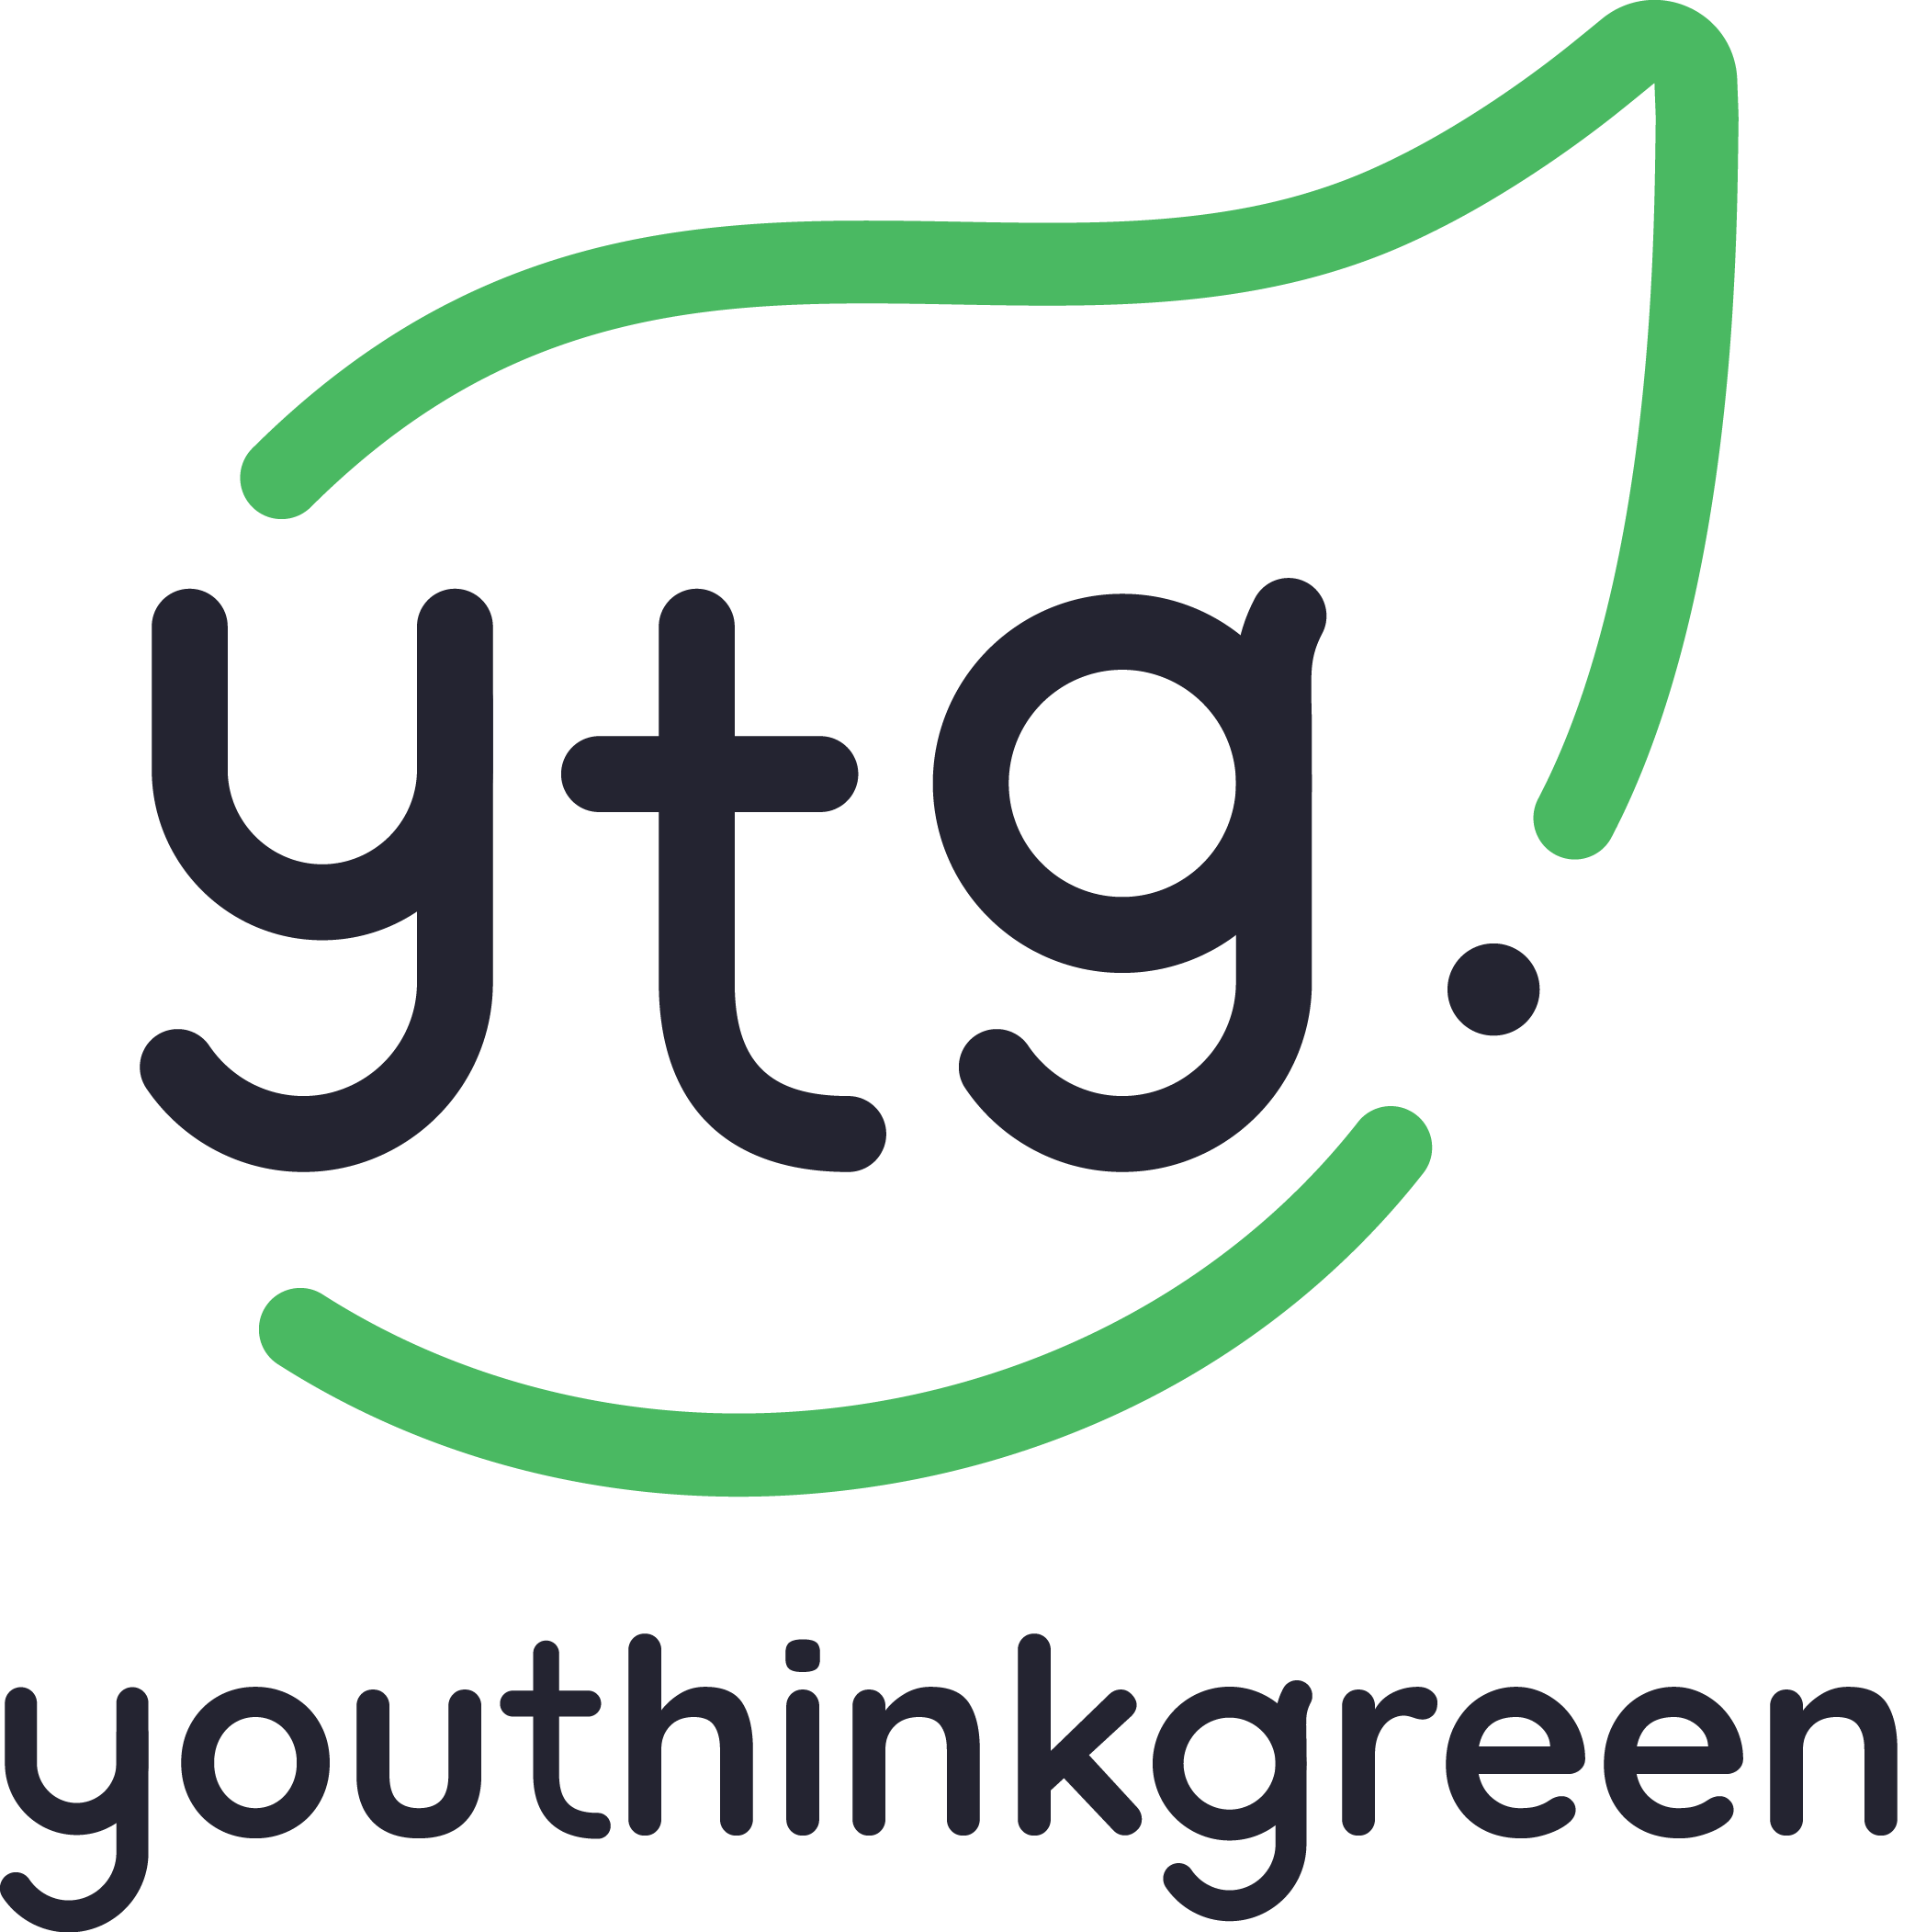 Linked logo for youthinkgreen Egypt